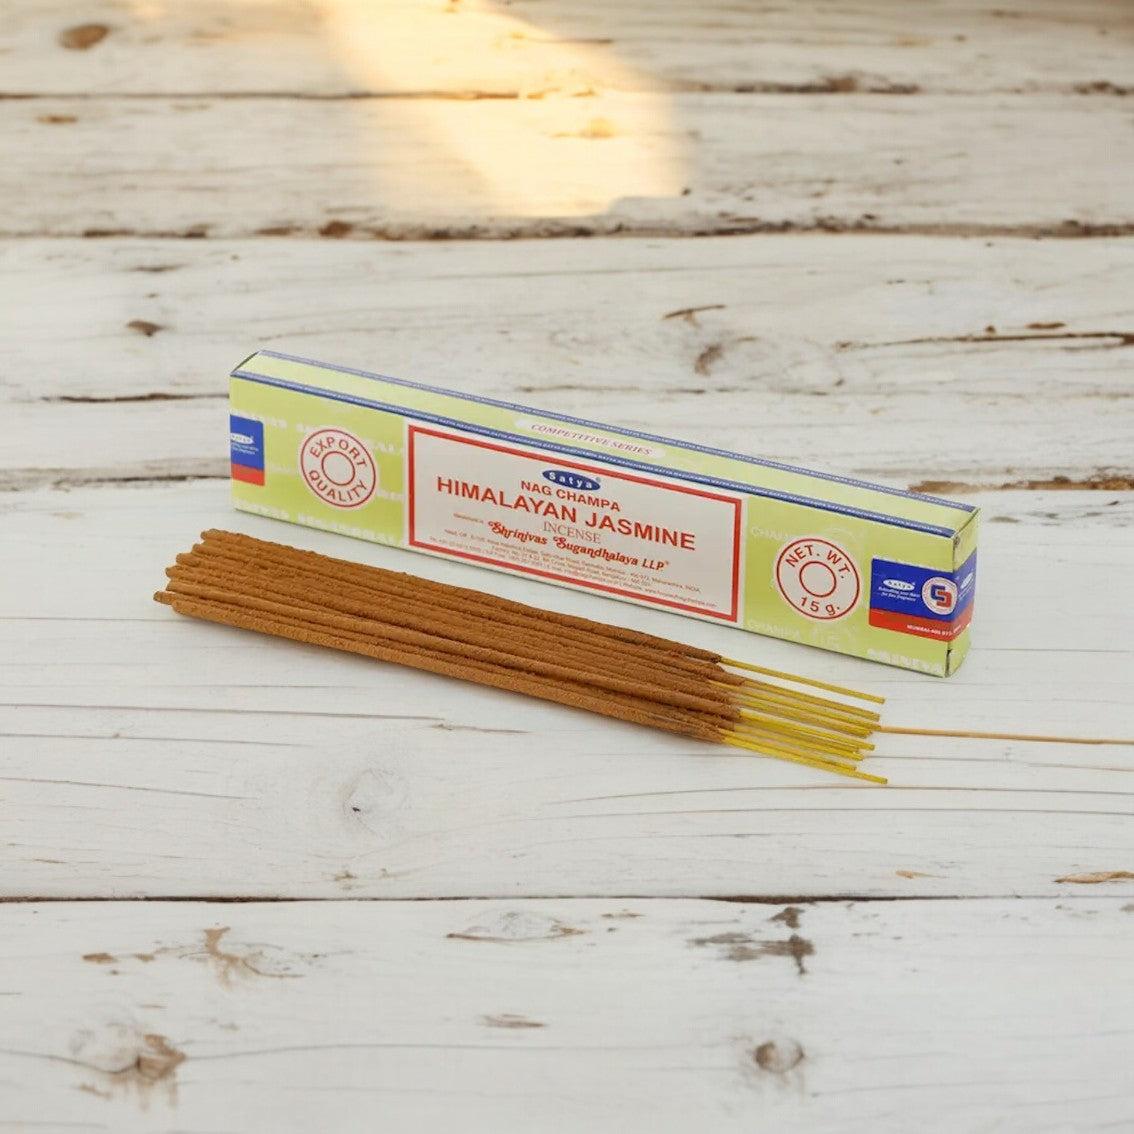 Himalayan Jasmine Nag Champa Incense Sticks